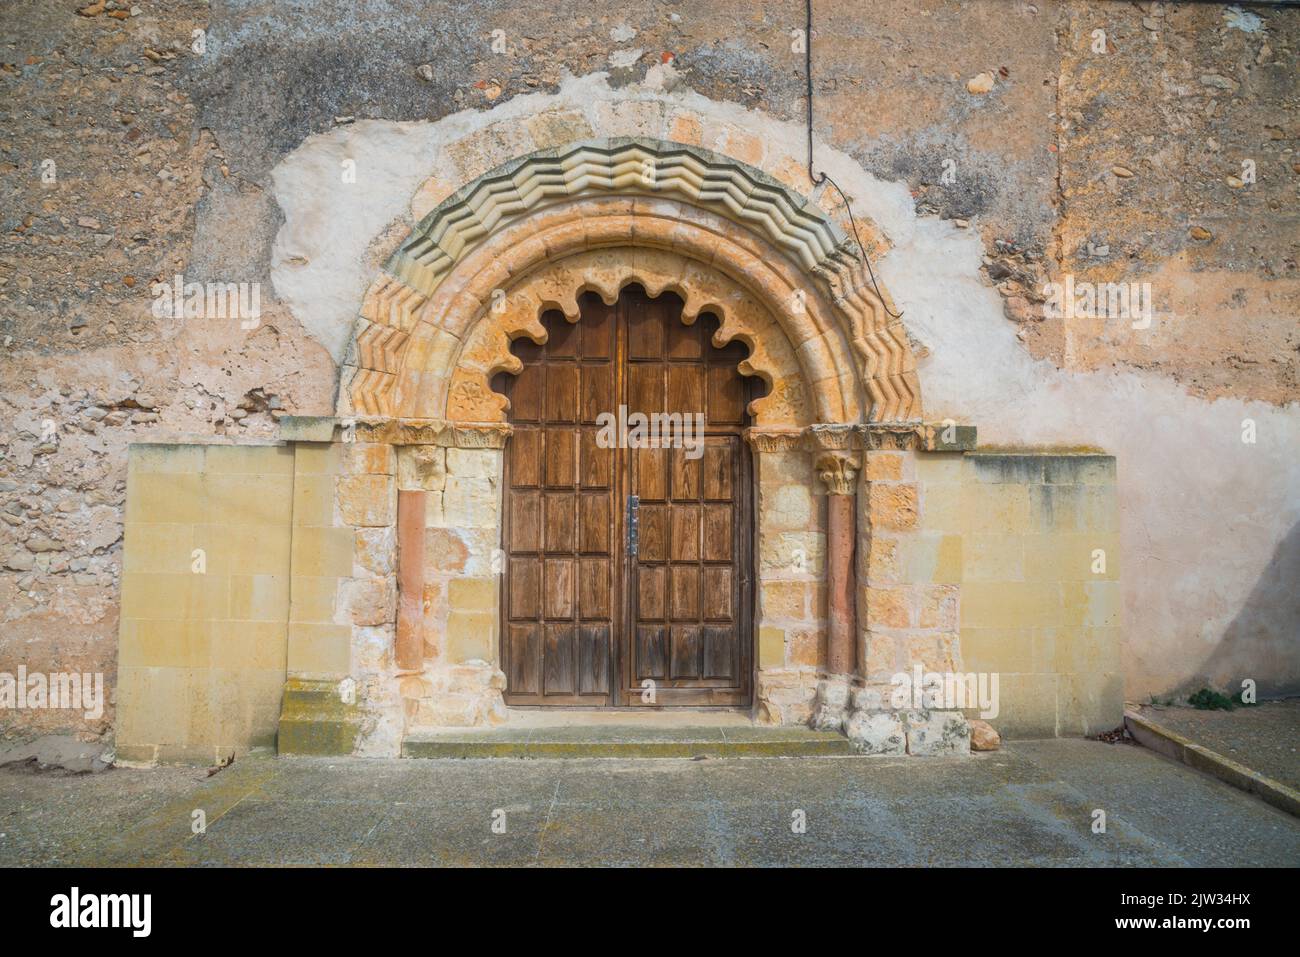 Facade of the church. El Olmo, Segovia province, Castilla Leon, Spain. Stock Photo